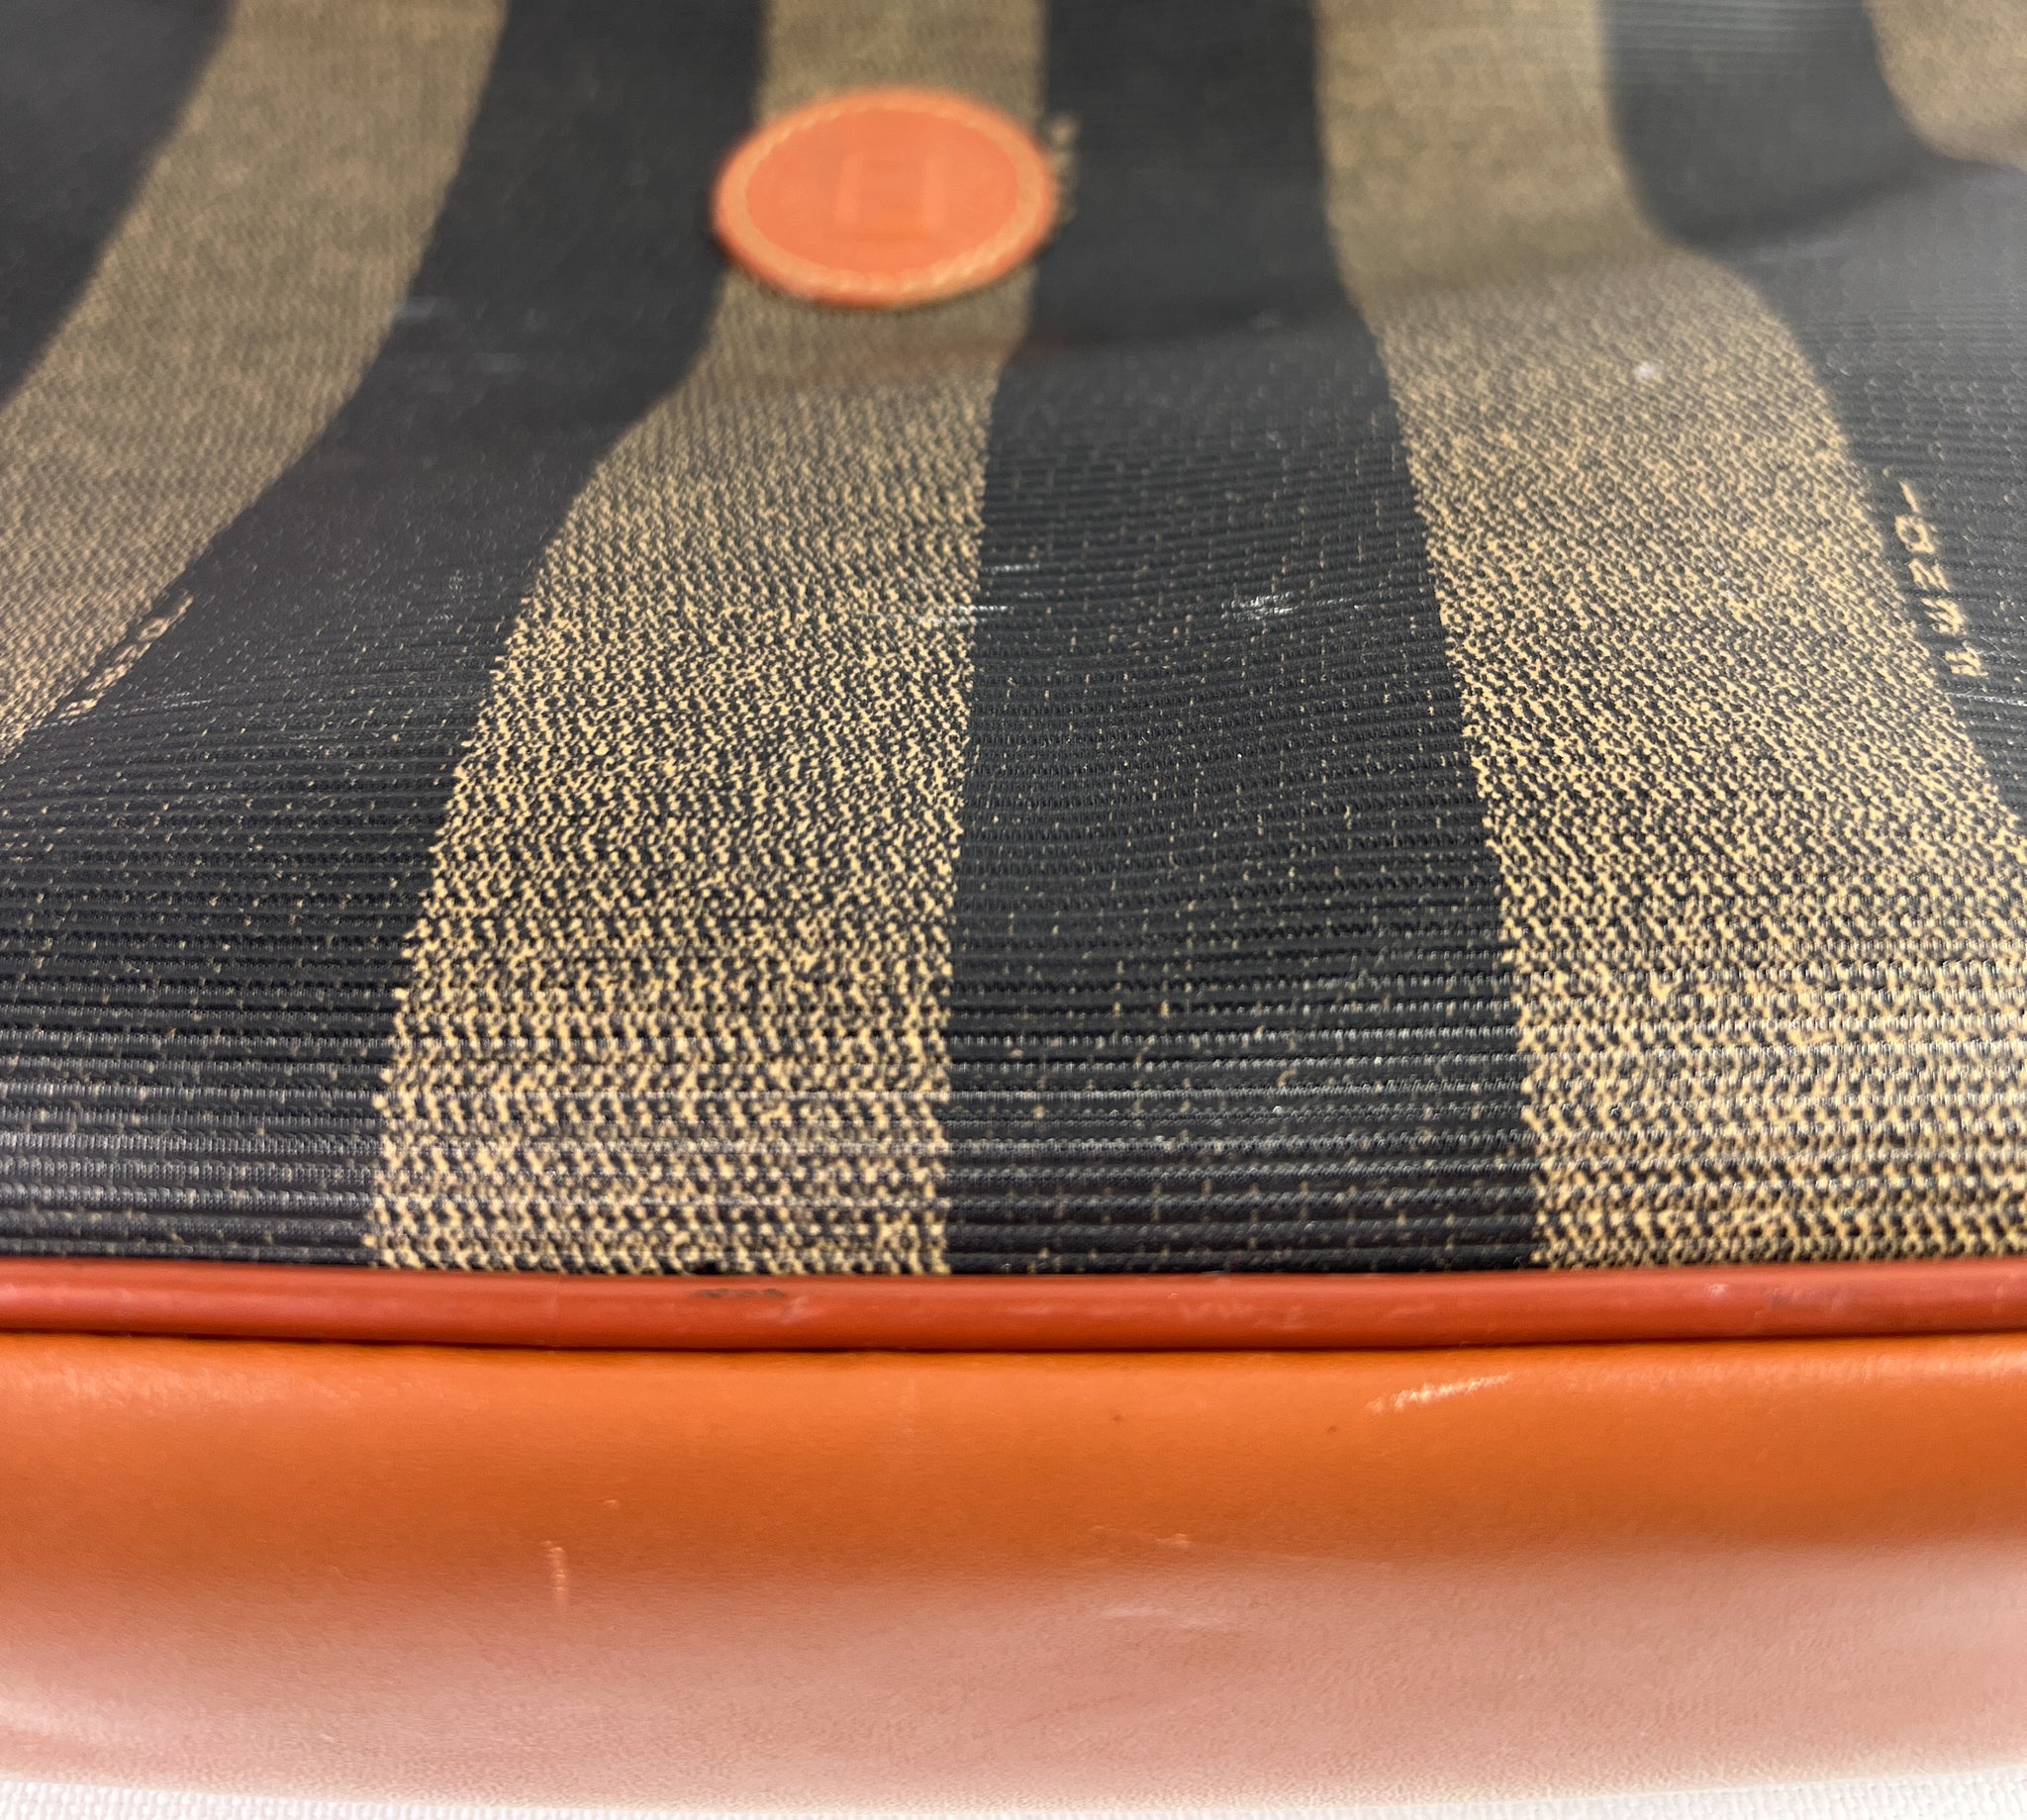 Vintage Fendi Striped Crossbody Bag